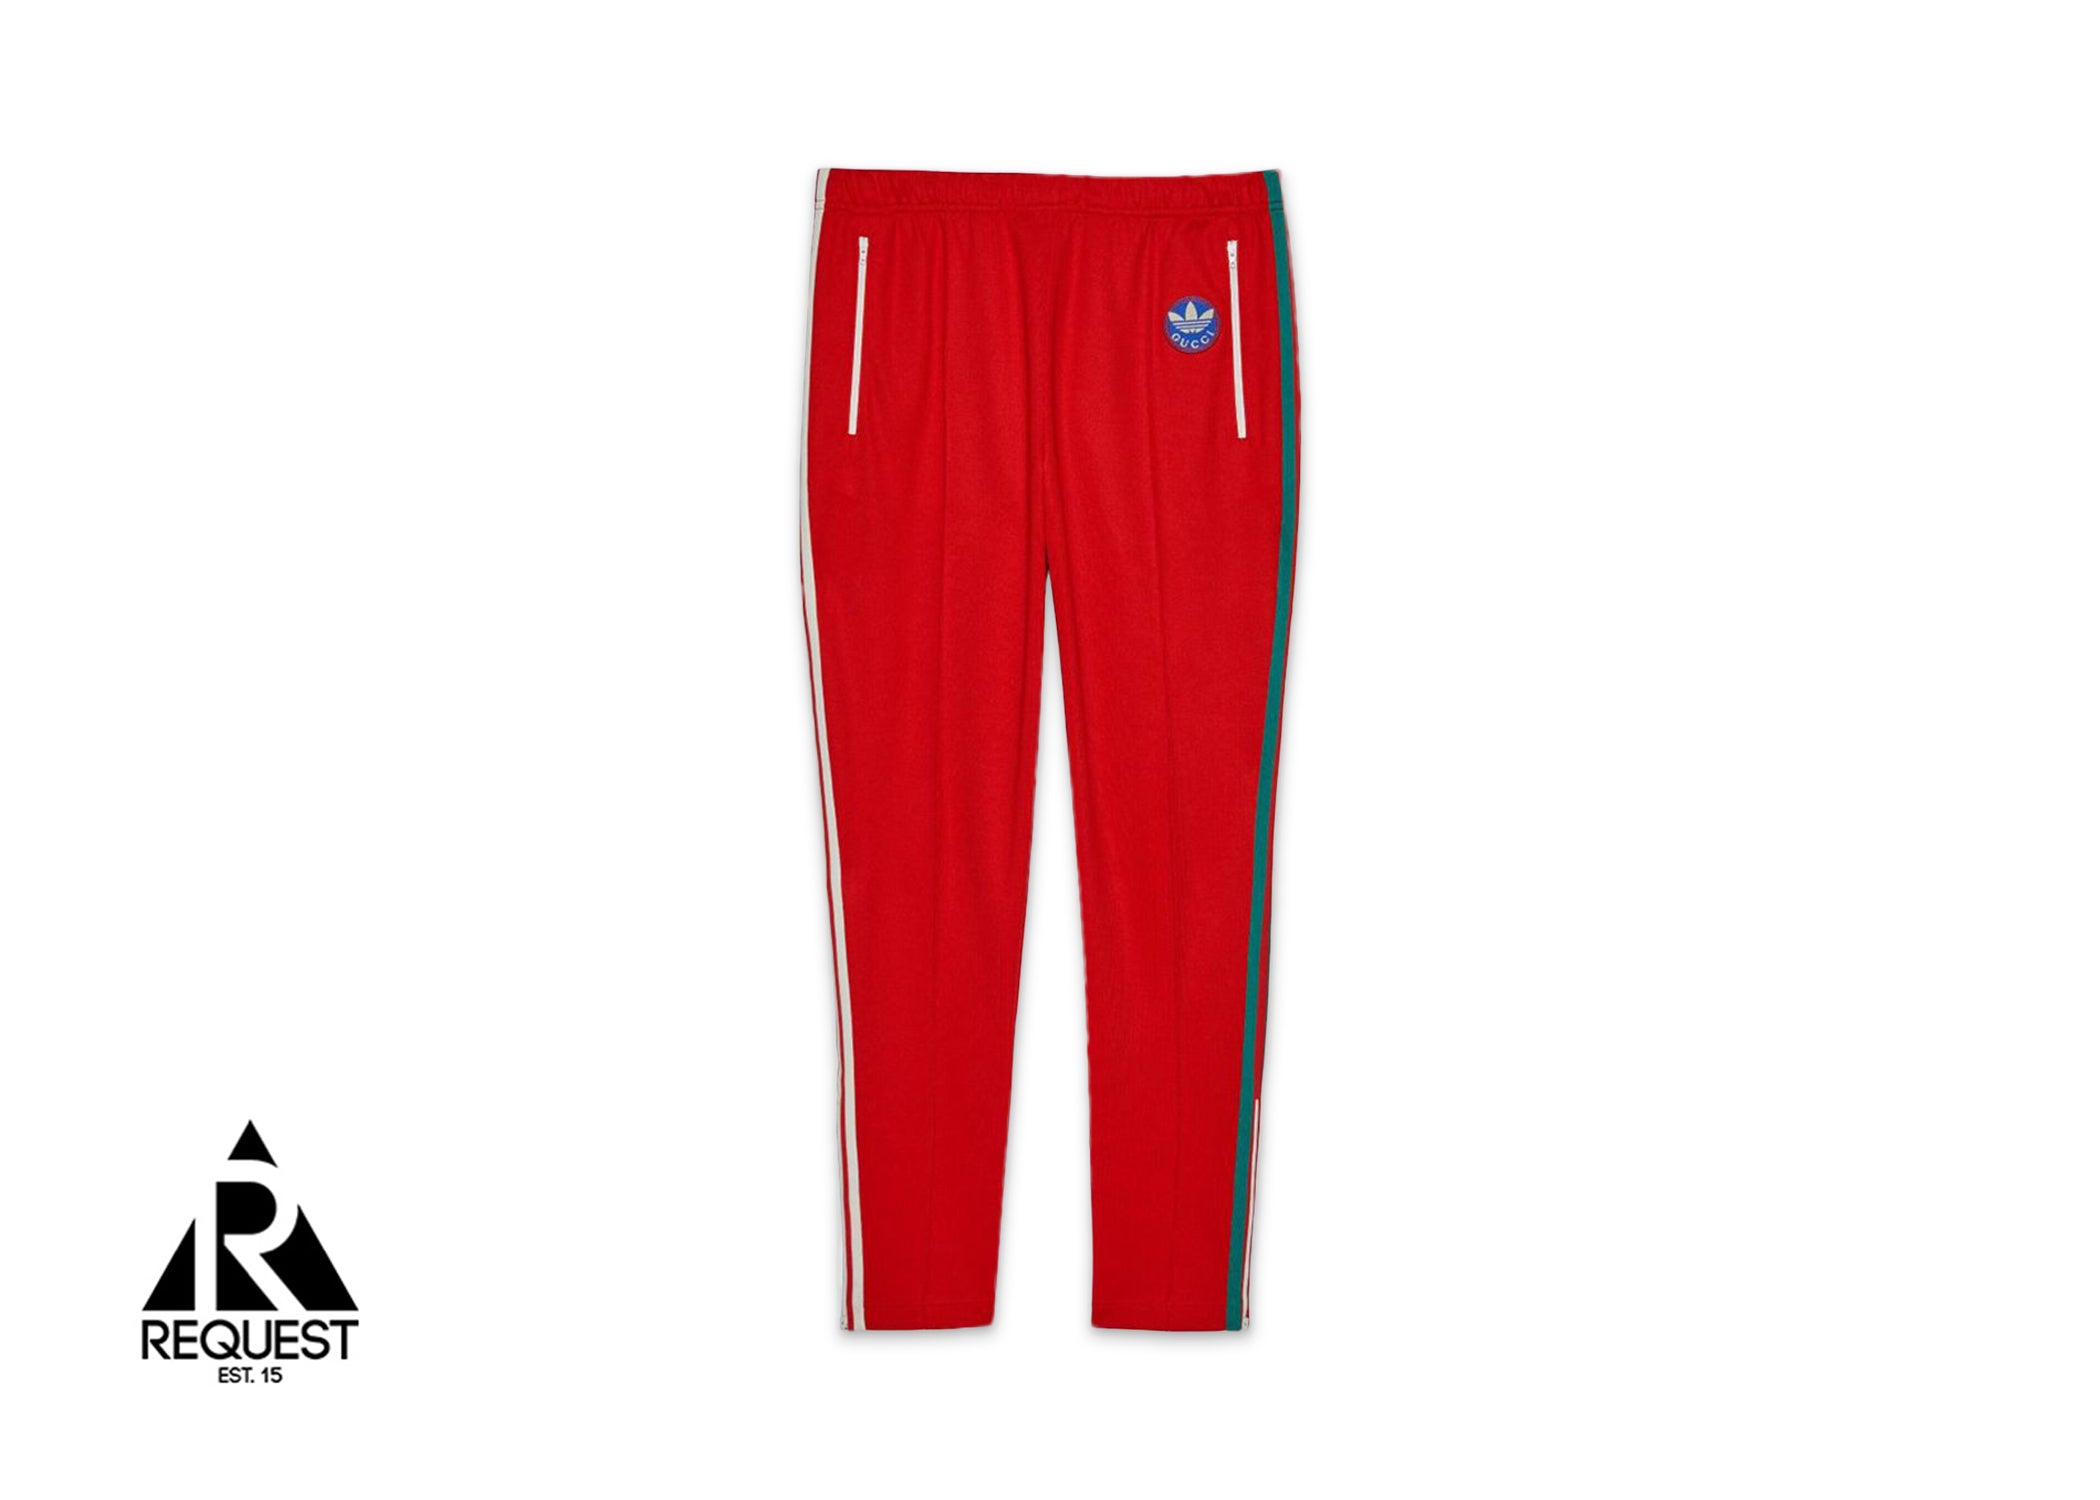 Gucci x Adidas Cotton Jersey Sweatpants "Red"